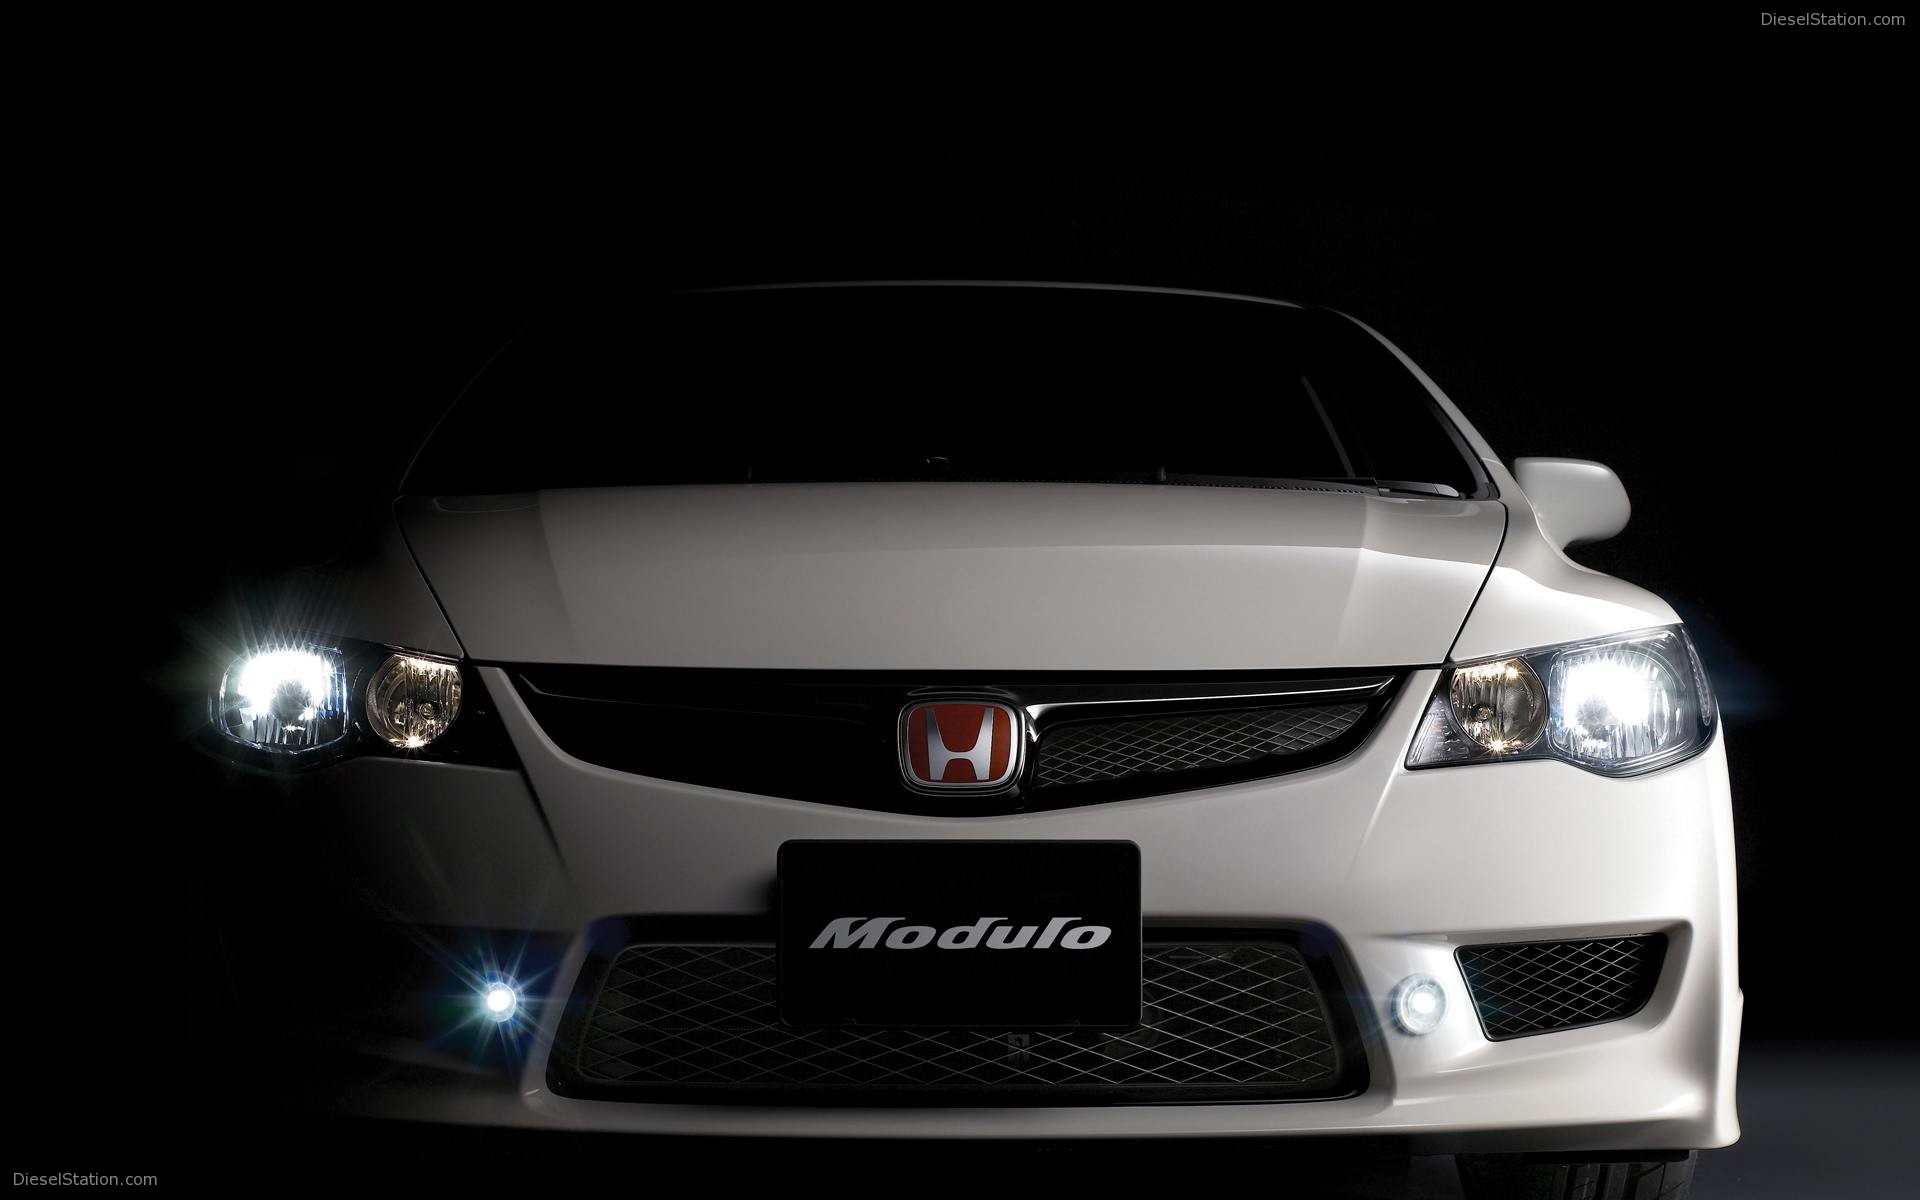 Honda Civic Type R Wallpaper HD In Cars Imageci